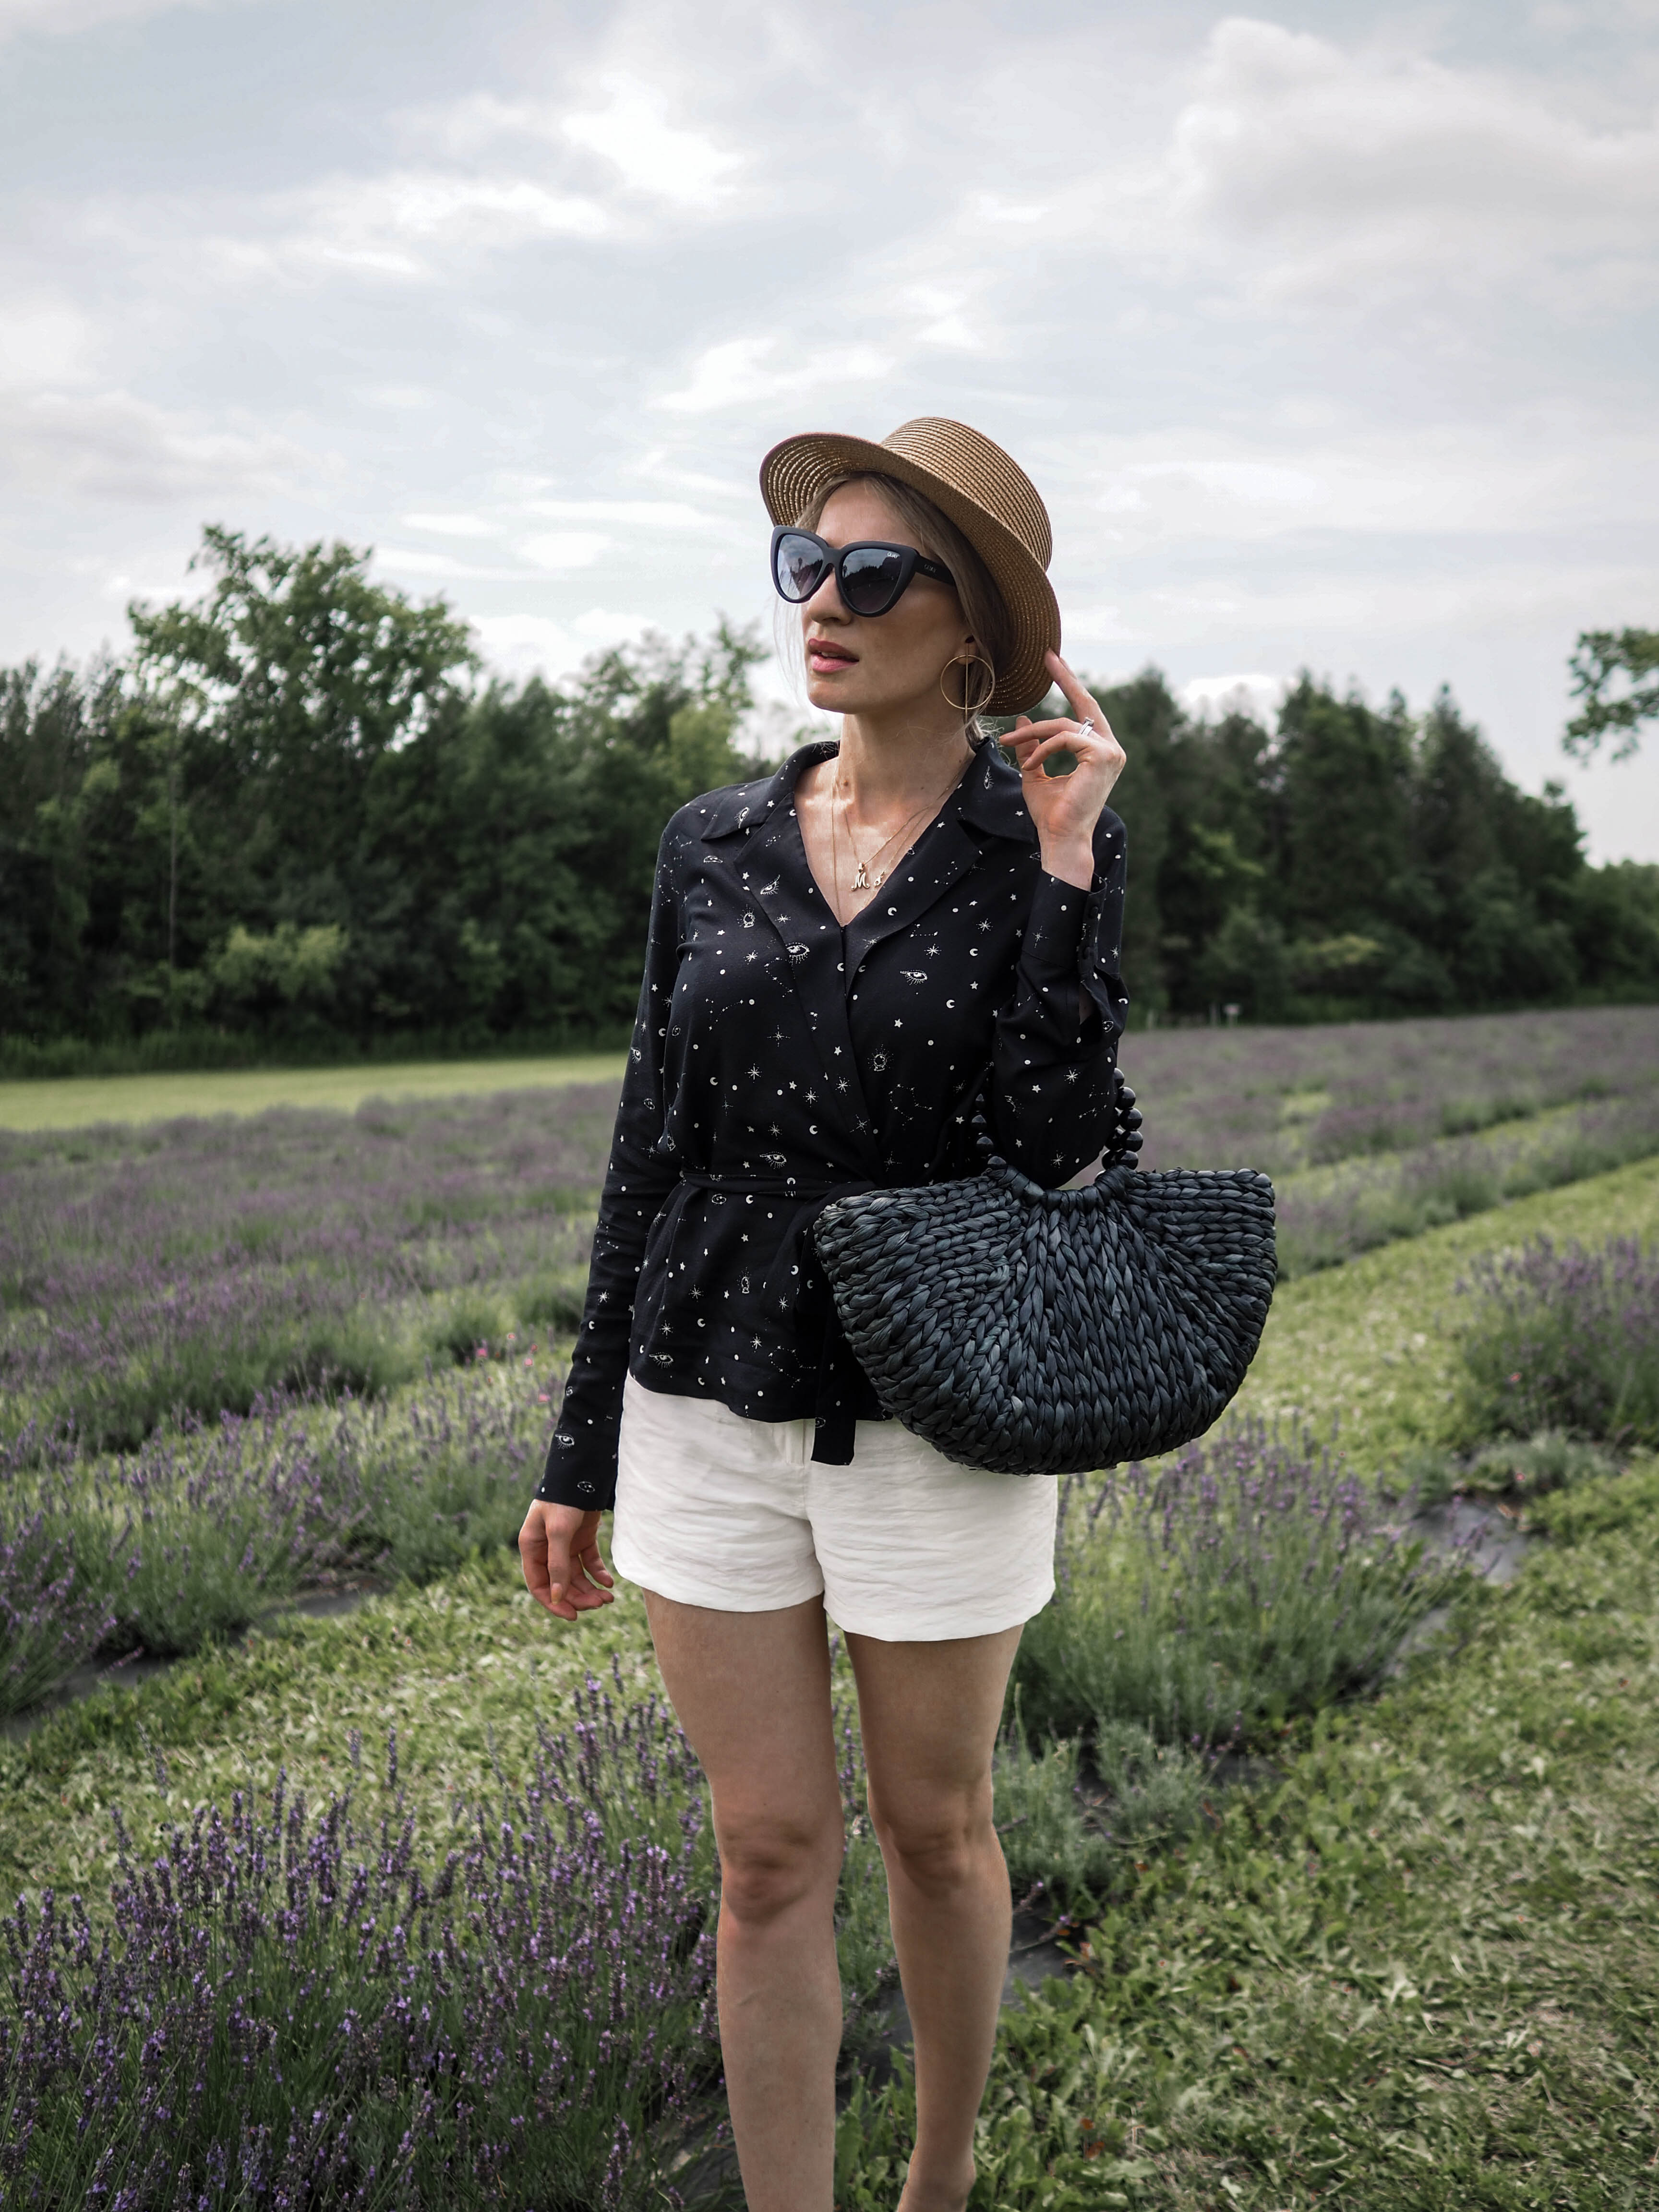 MON MODE | Fashion Blogger | Toronto Blogger | Terre Bleu Lavender Farm